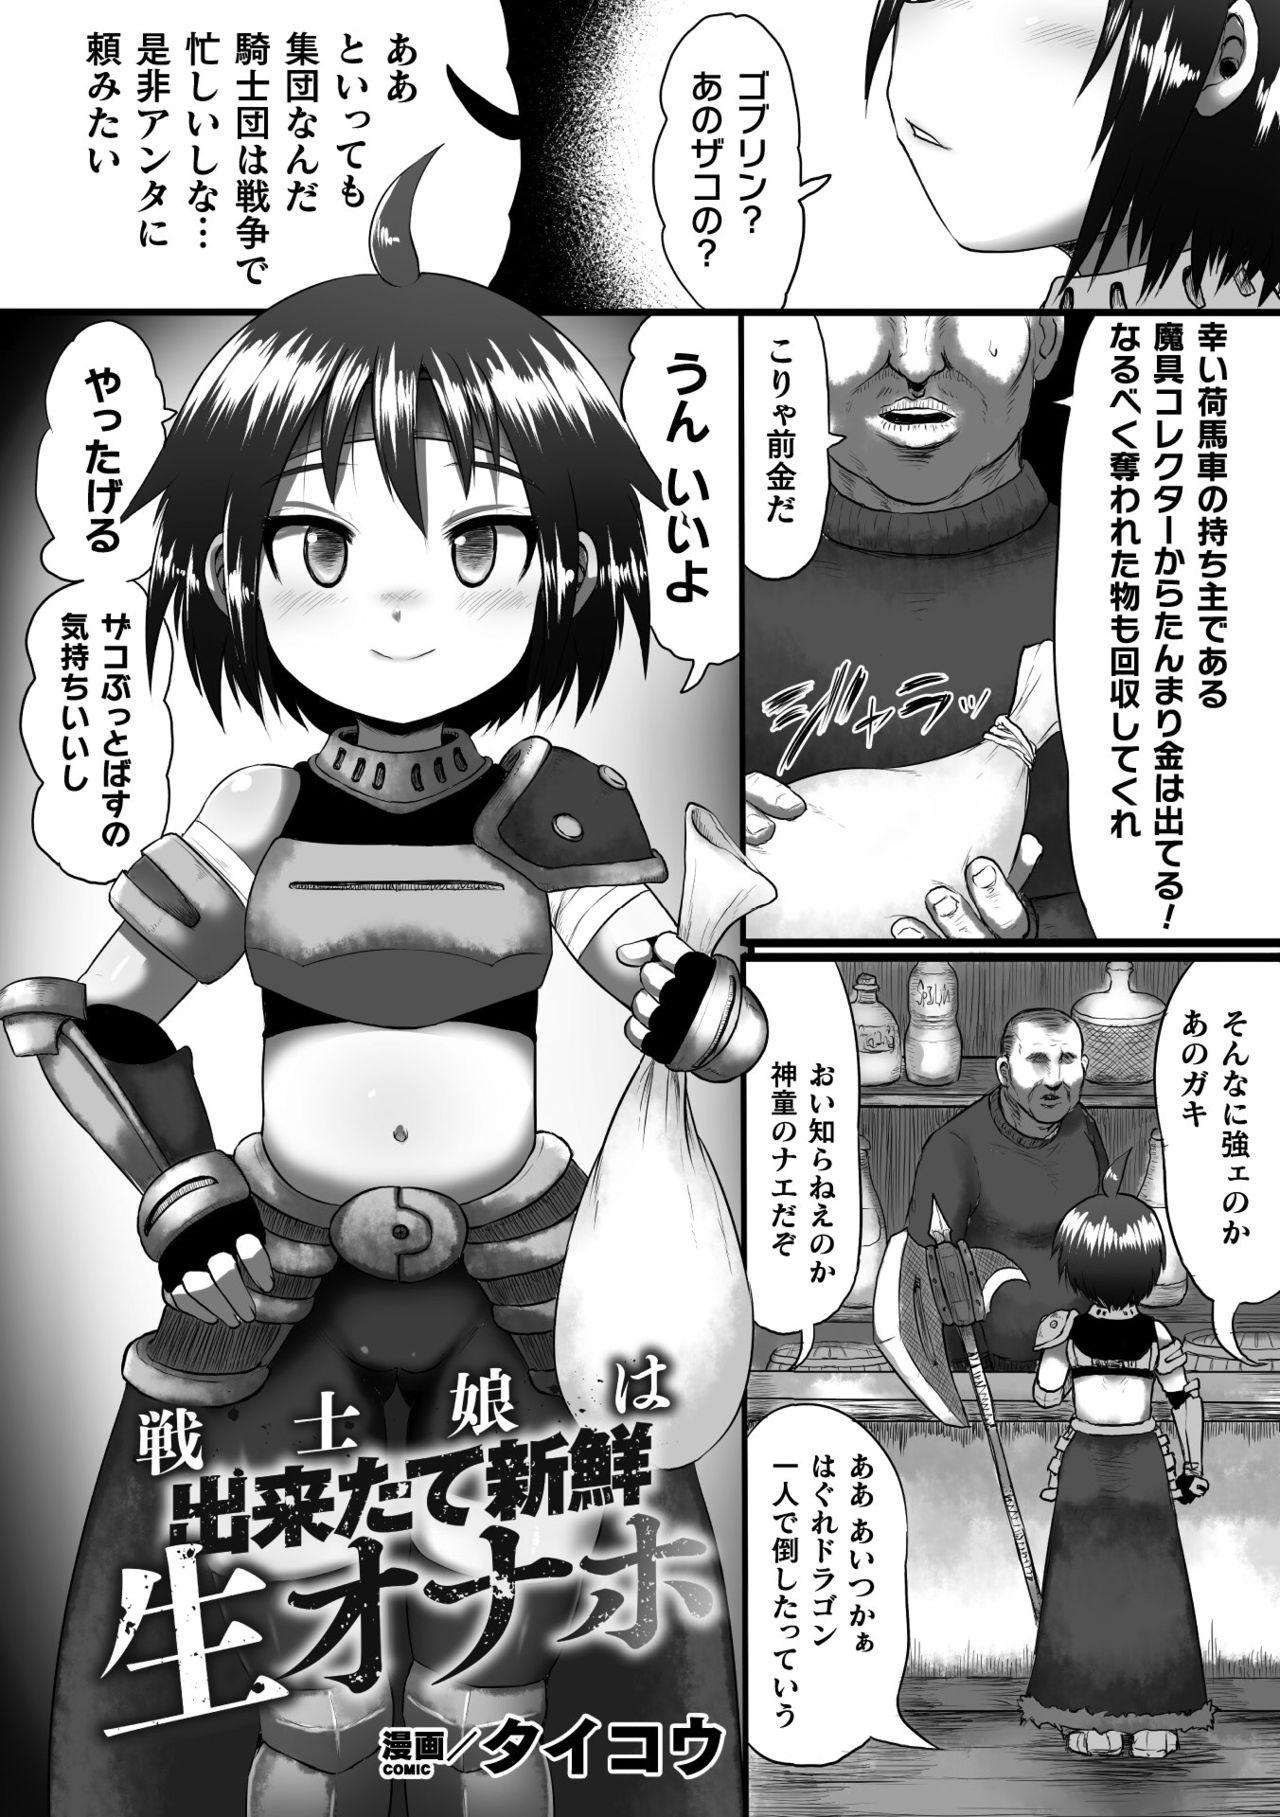 2D Comic Magazine - Syukusyouka Hiroin Kyousei Onahole Keikaku Vol. 1 62